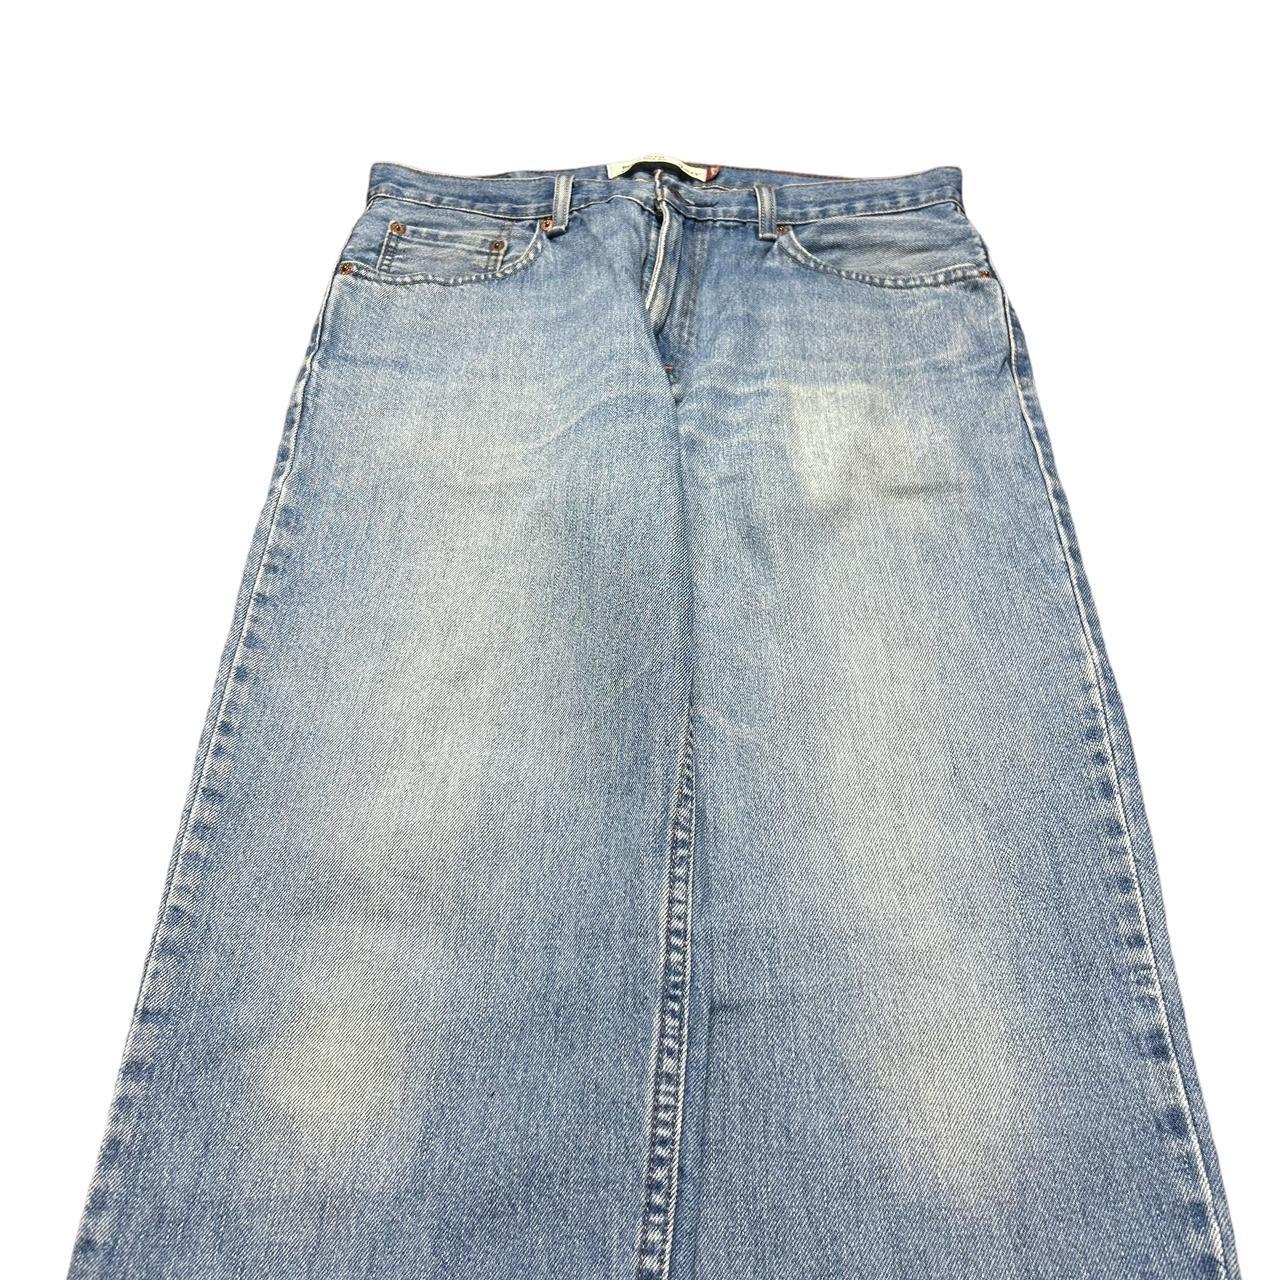 Levi’s 550 jeans. Light wash faded blue denim.... - Depop